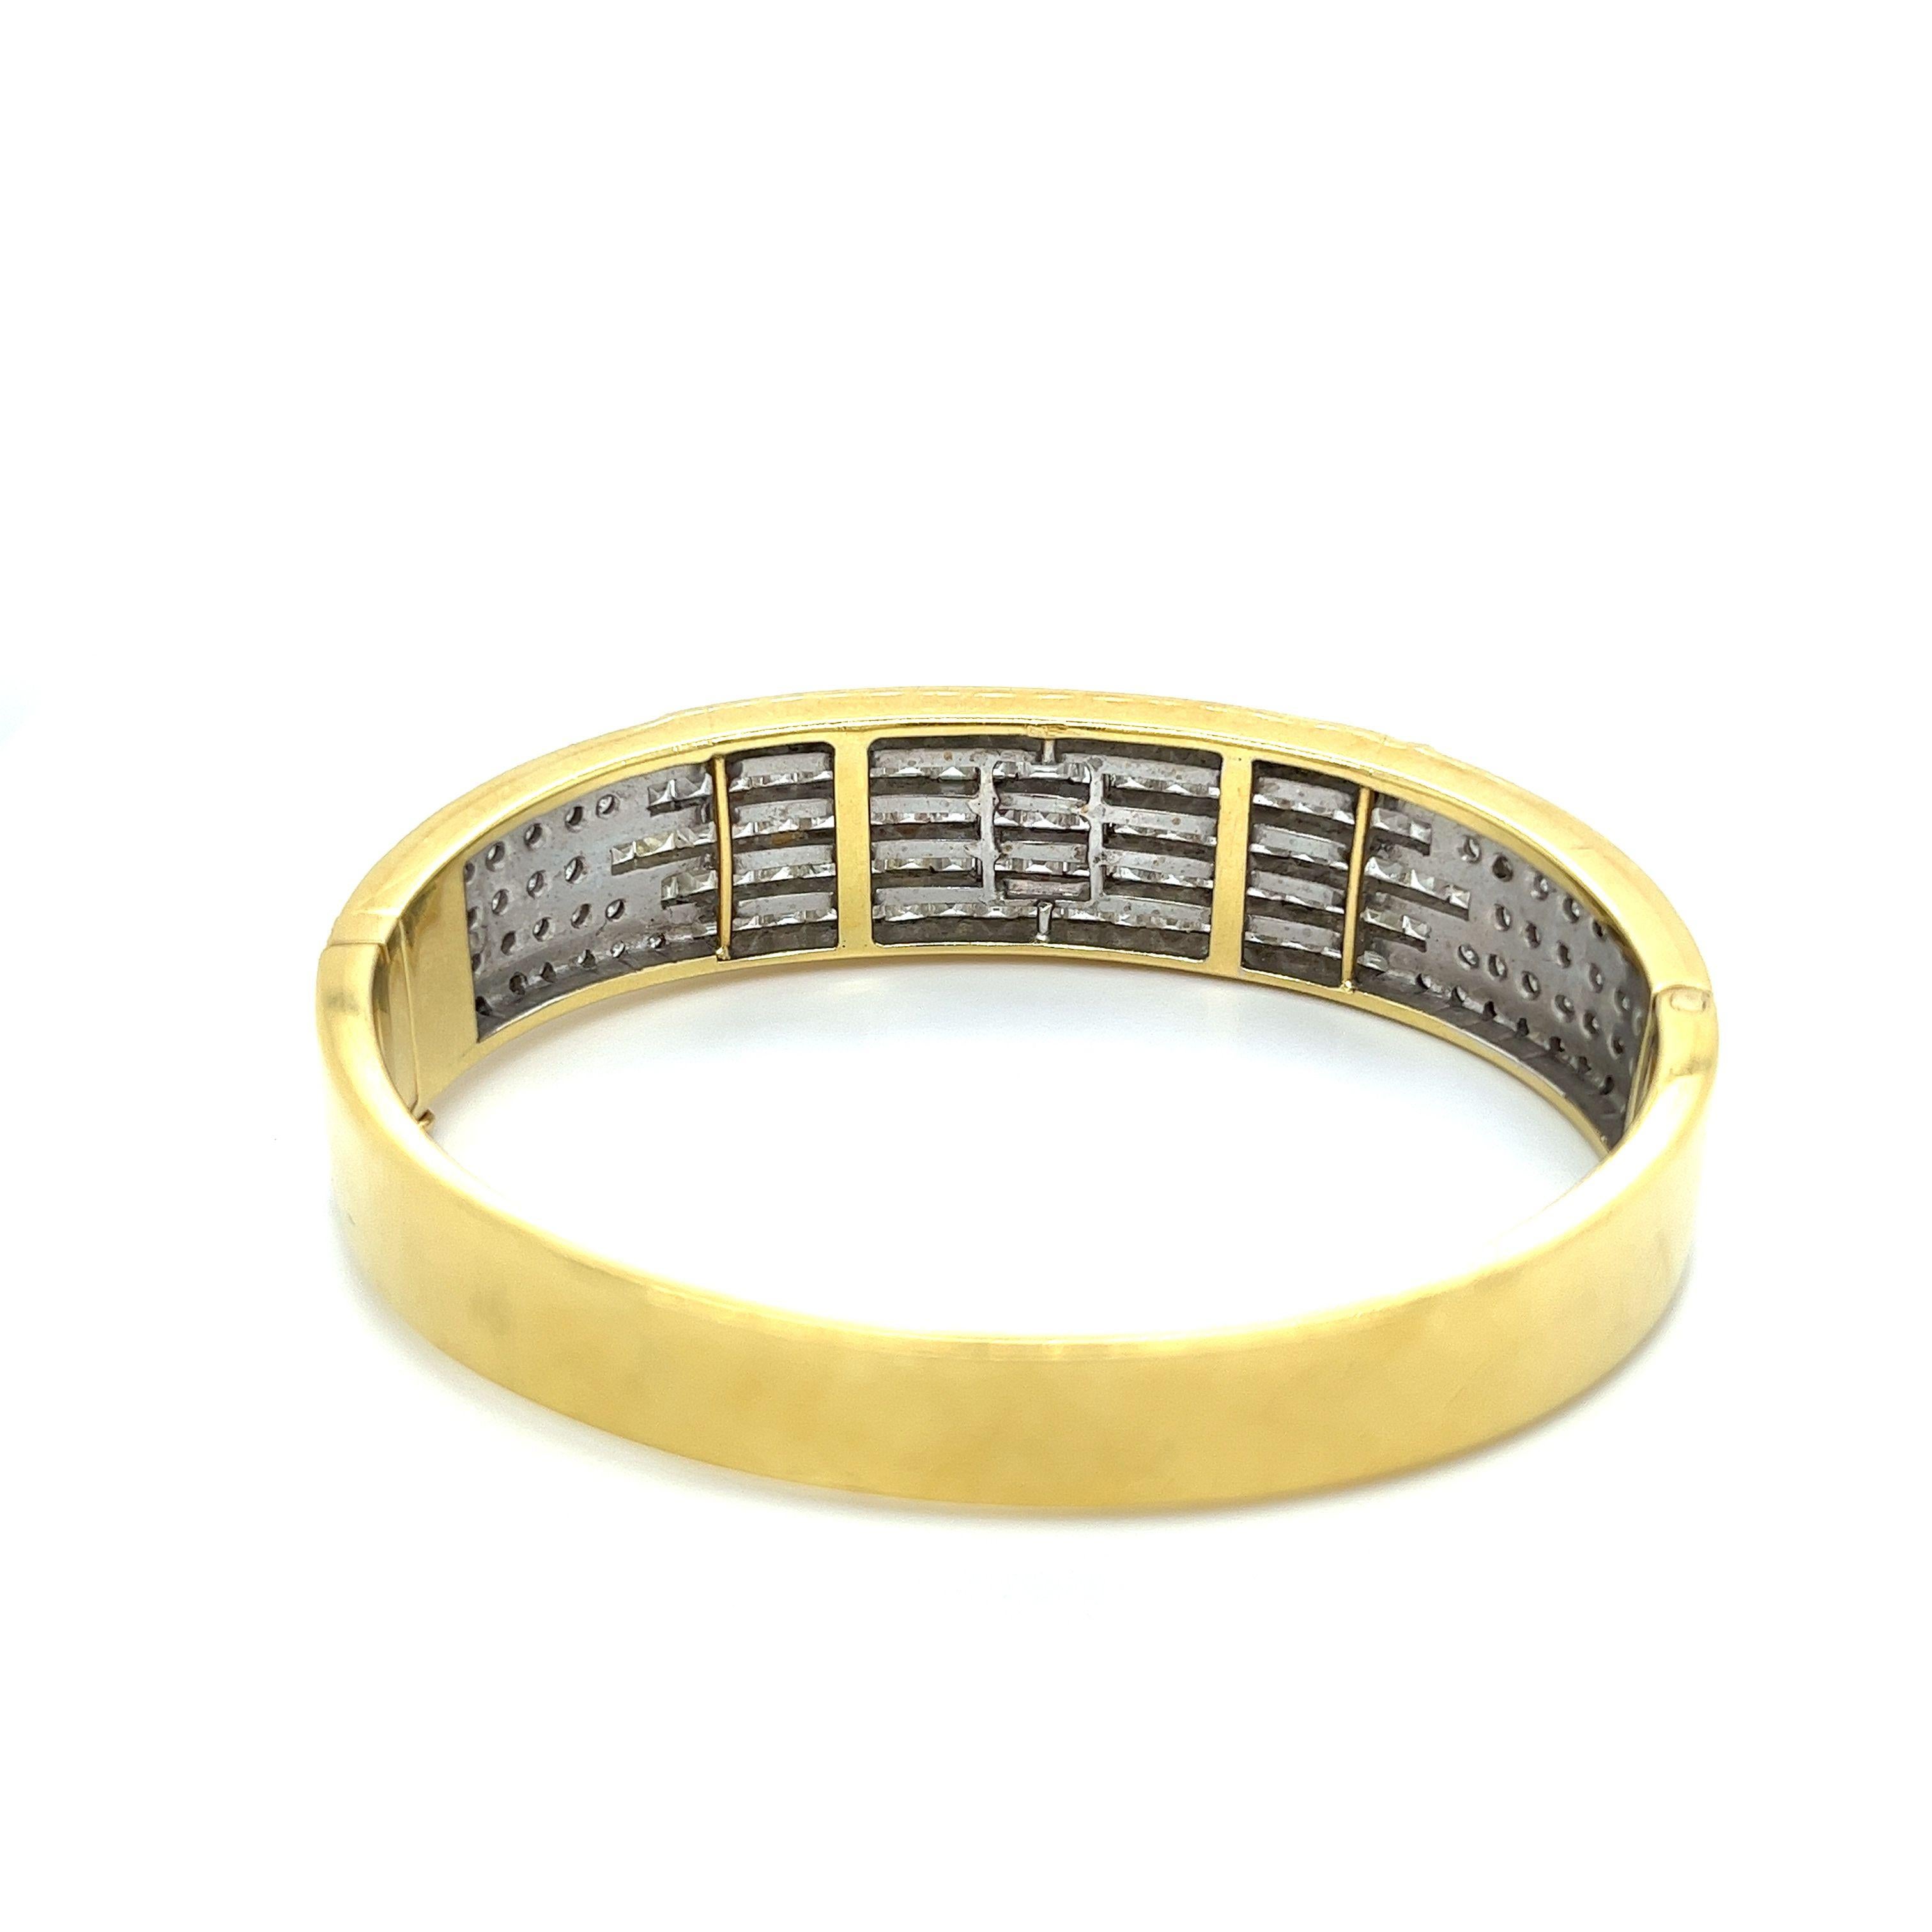 Art Deco 10 Carat Baguette Cut Multi-Row Diamond Encrusted Bangle Bracelet in 18k Gold For Sale